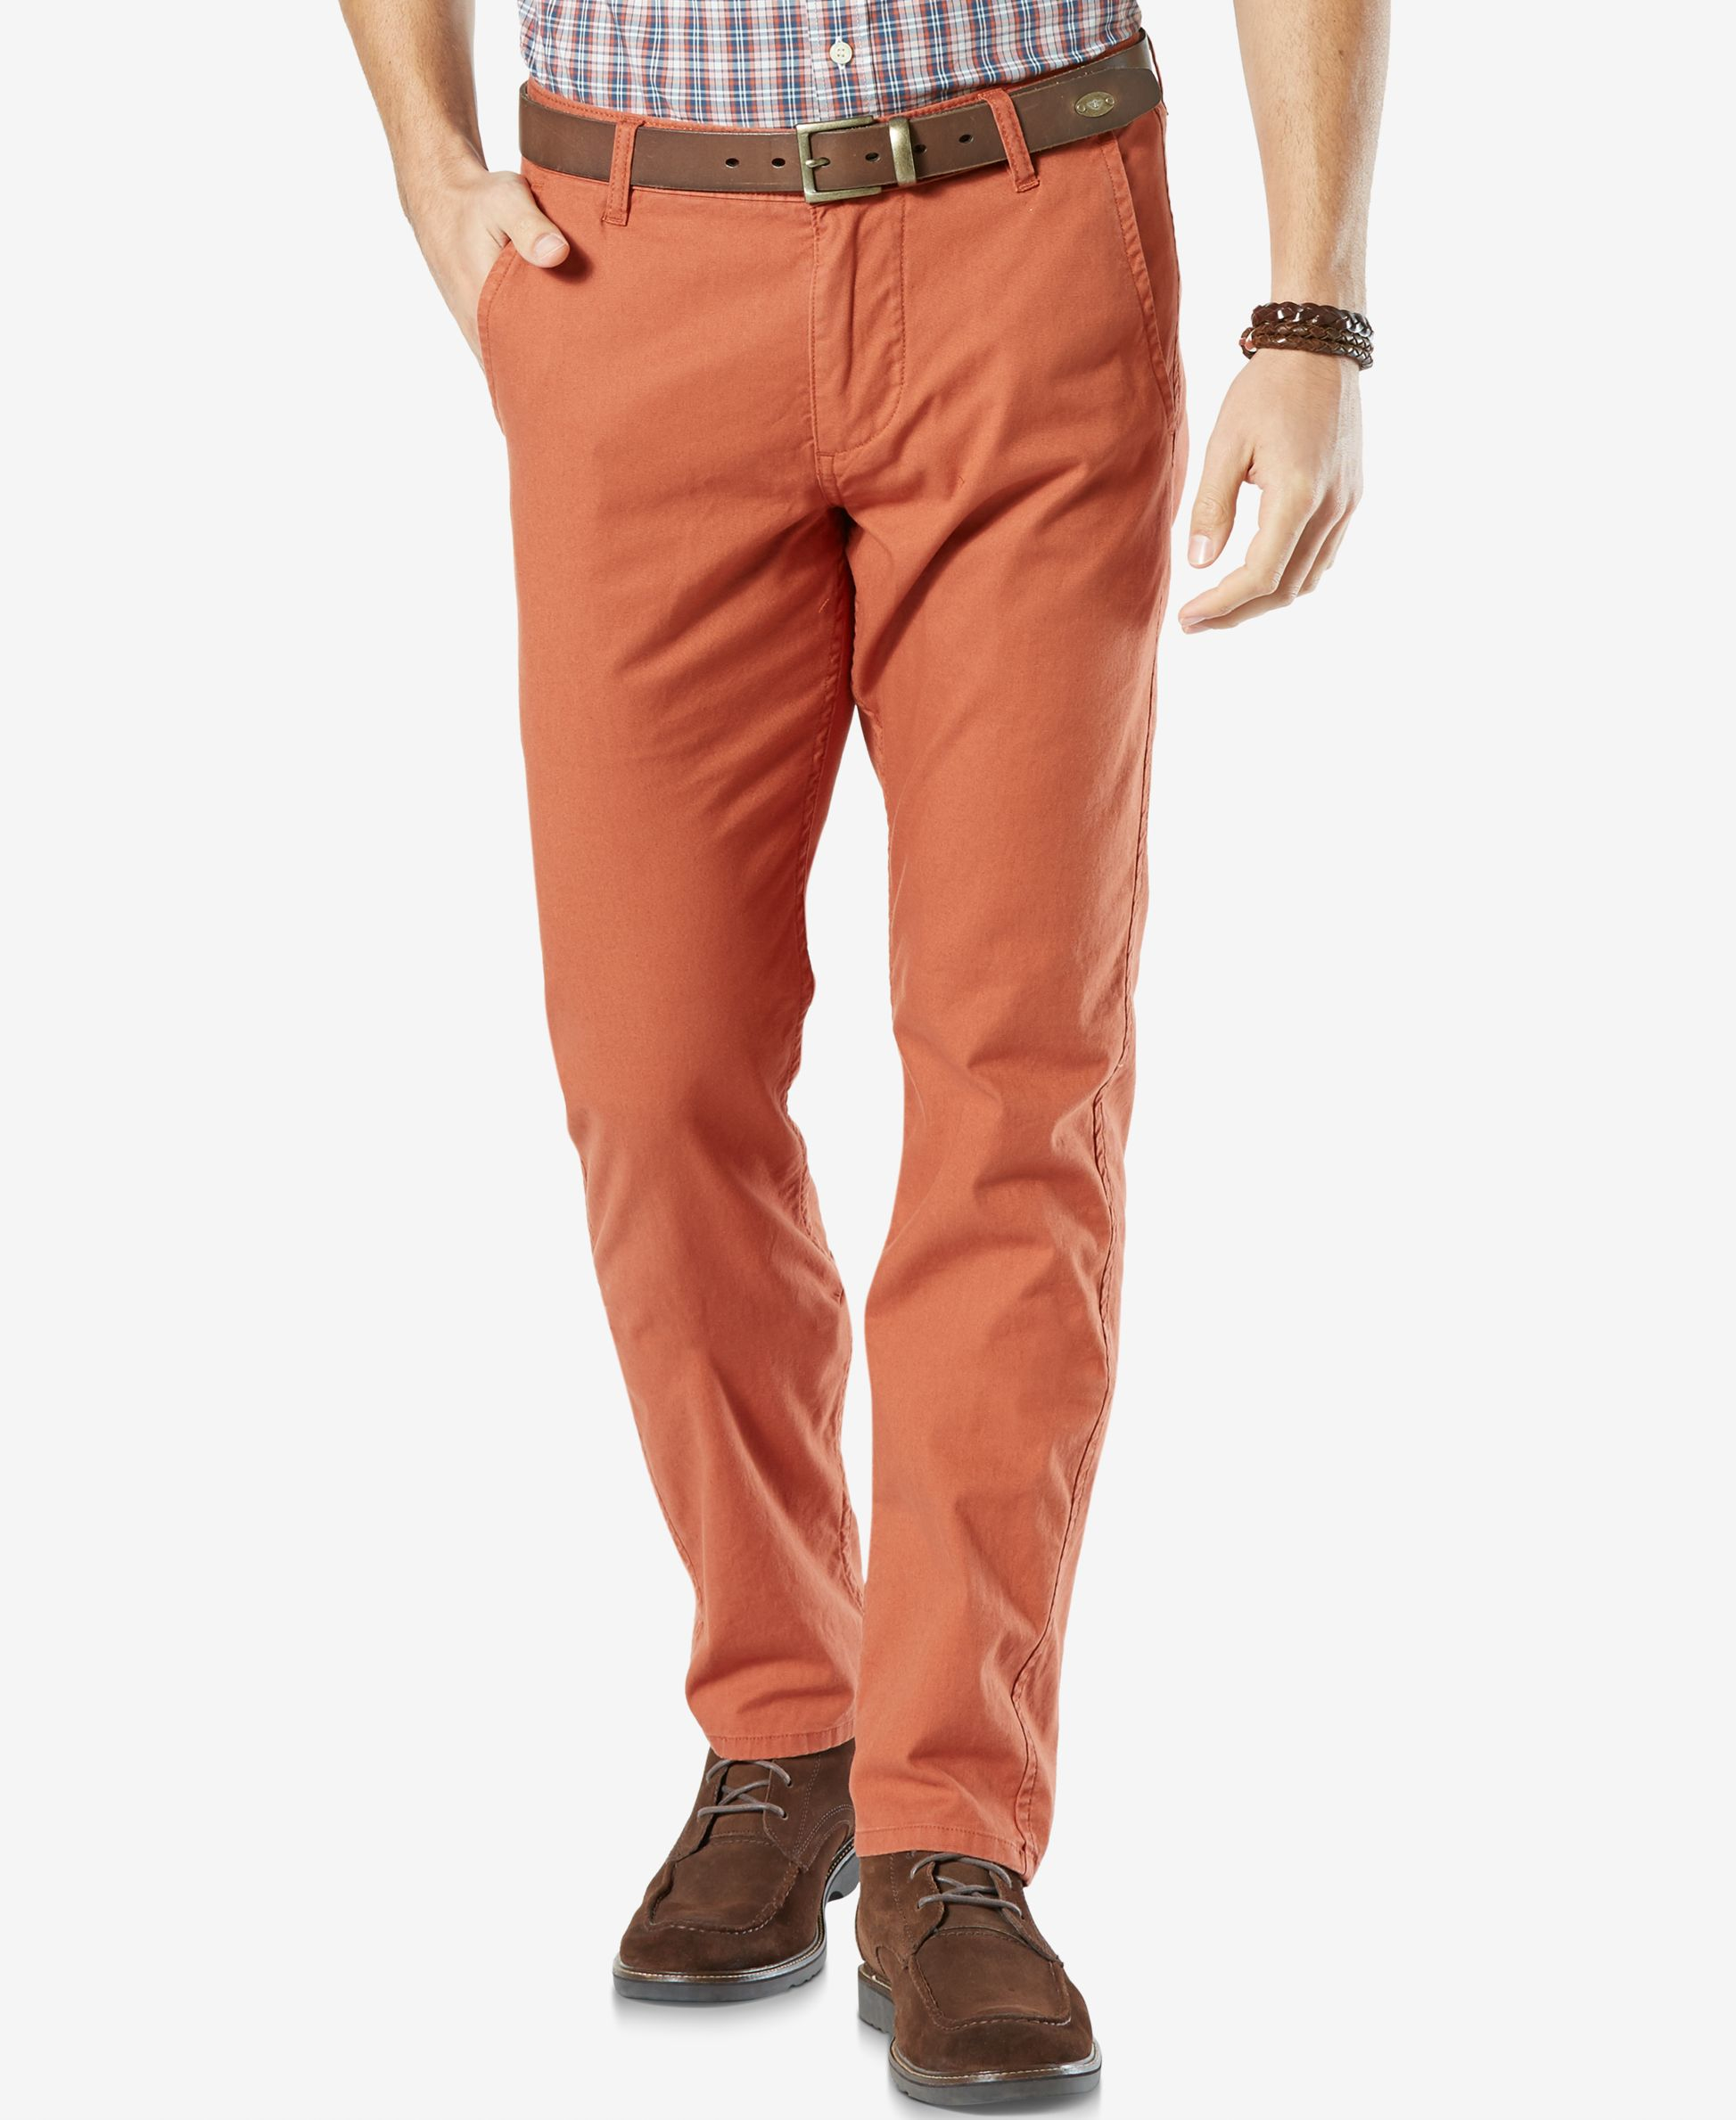 Onnodig stortbui Viool Dockers Cotton Alpha Khaki Slim-tapered Lightweight Stretch Pants in Orange  for Men - Lyst